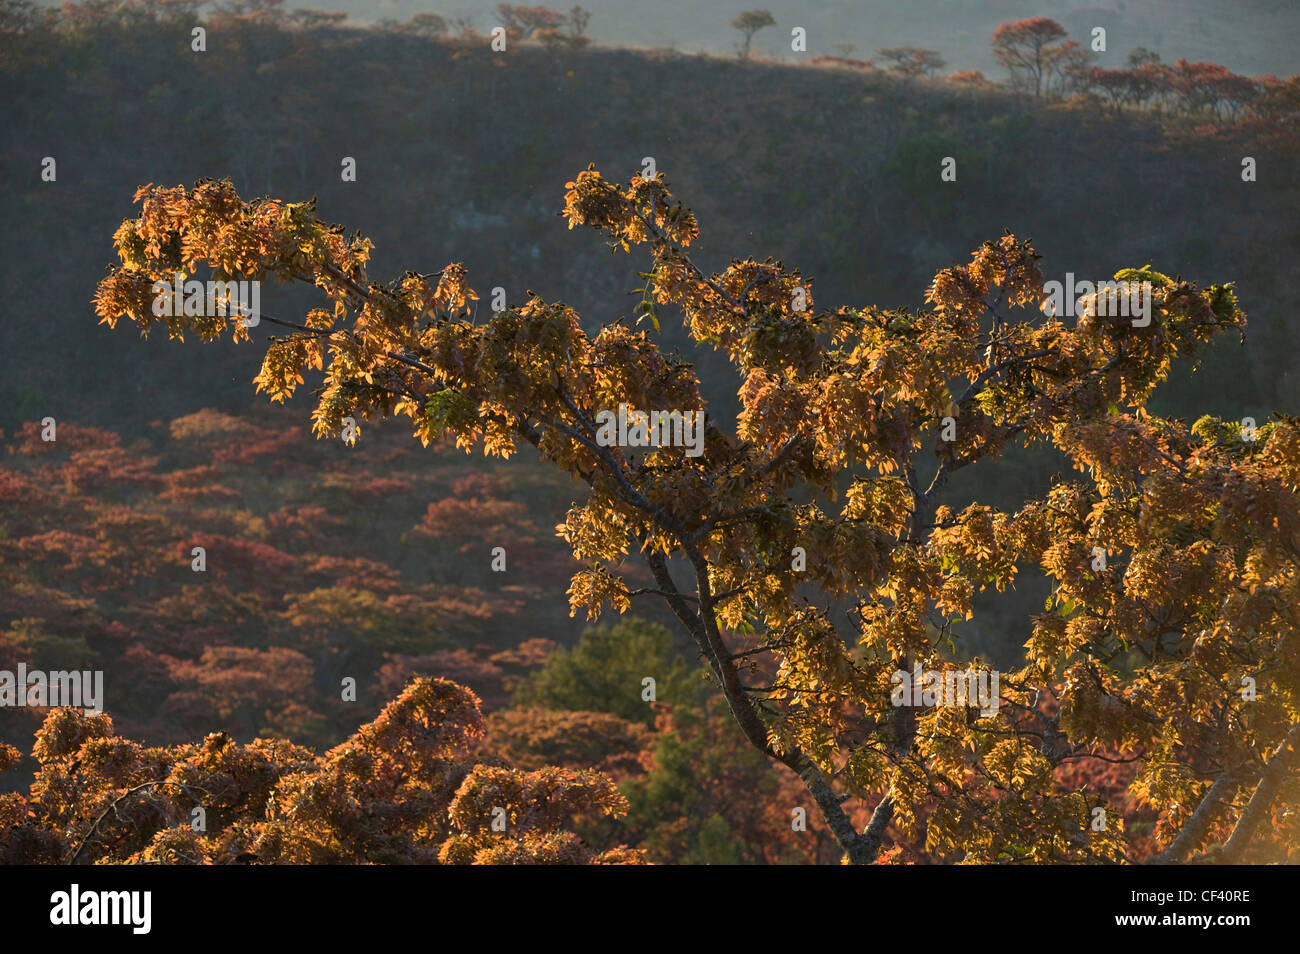 Flowering Msasa trees in Zimbabwe's eastern highlands Stock Photo